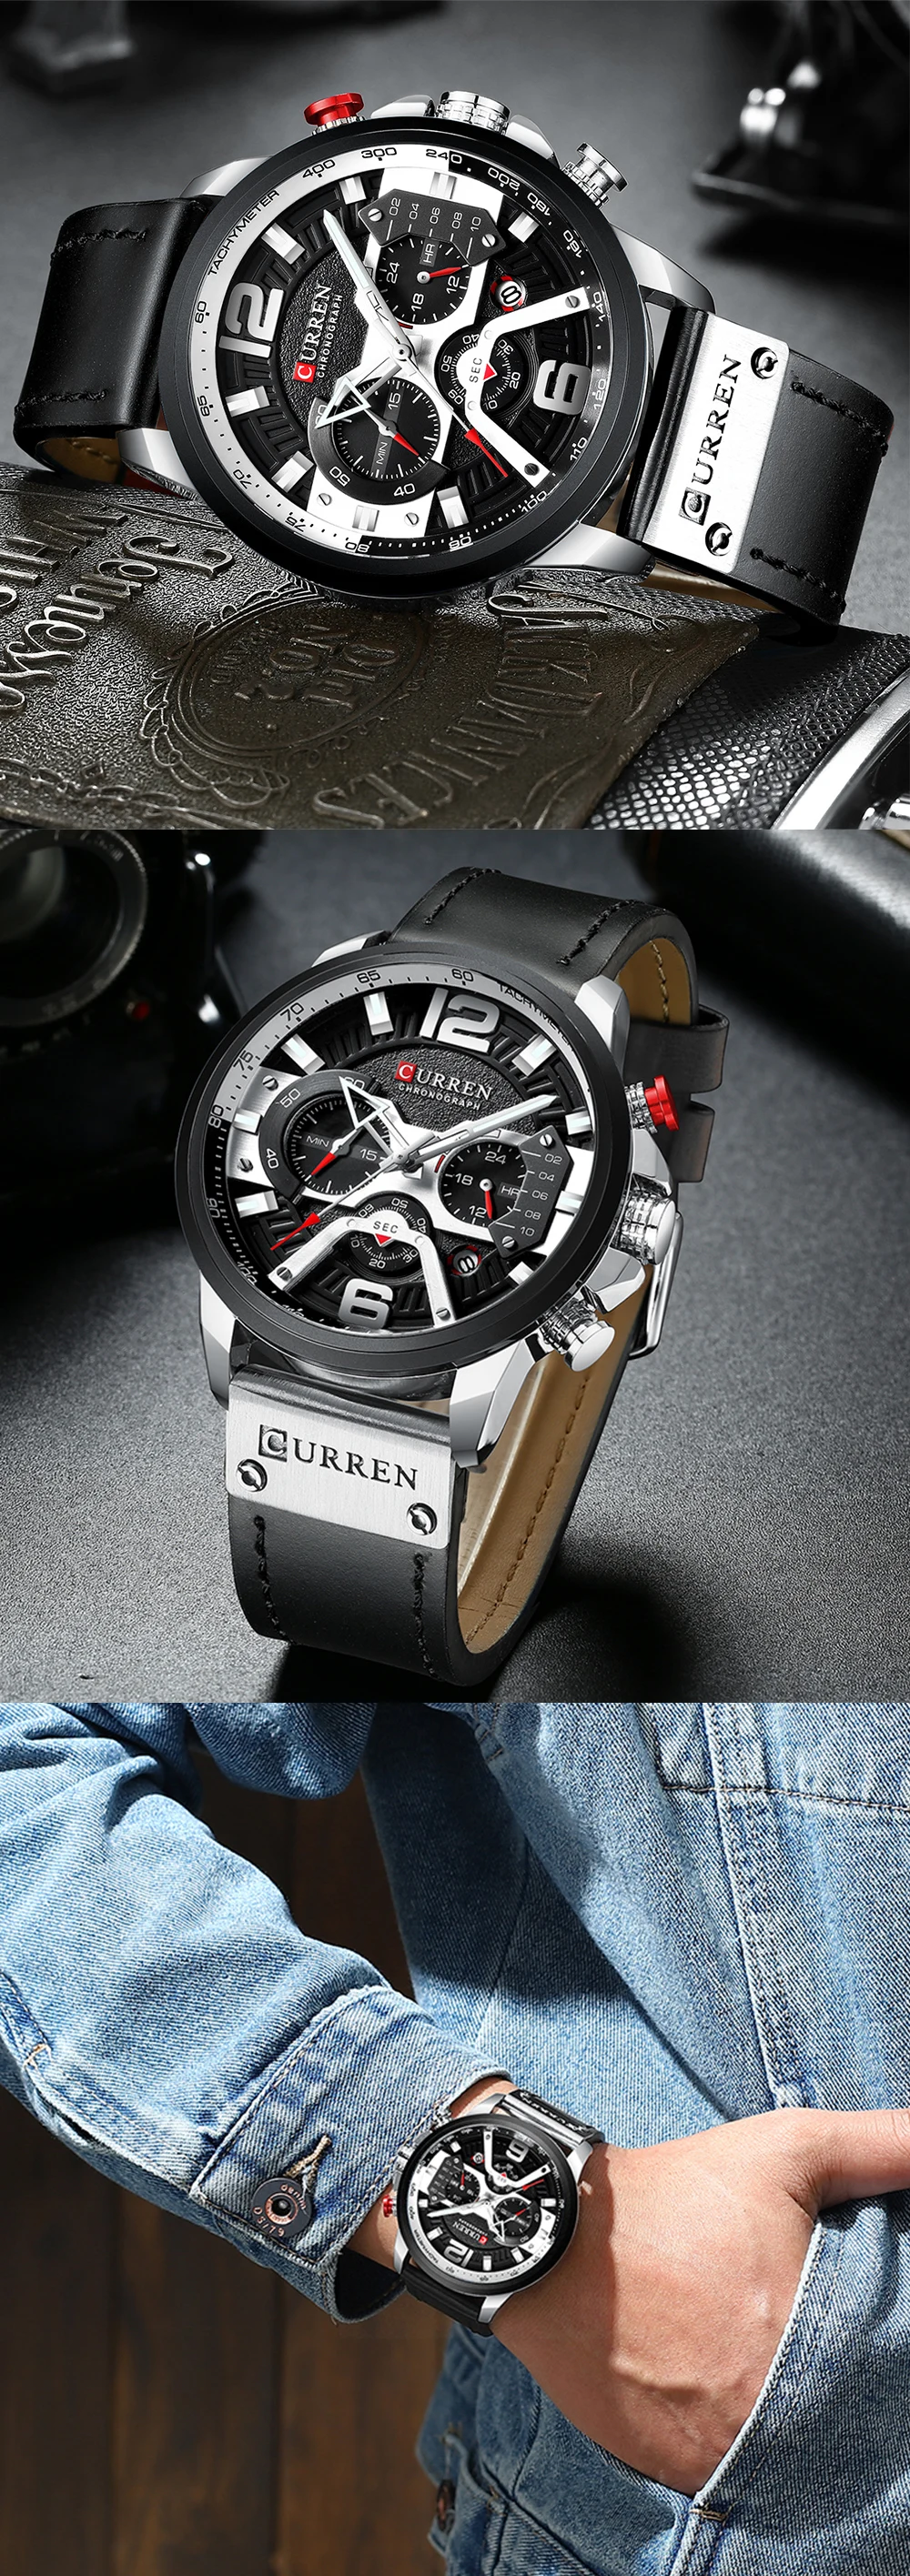 CURREN 8329 quartz men's watches wholesale price with watch box